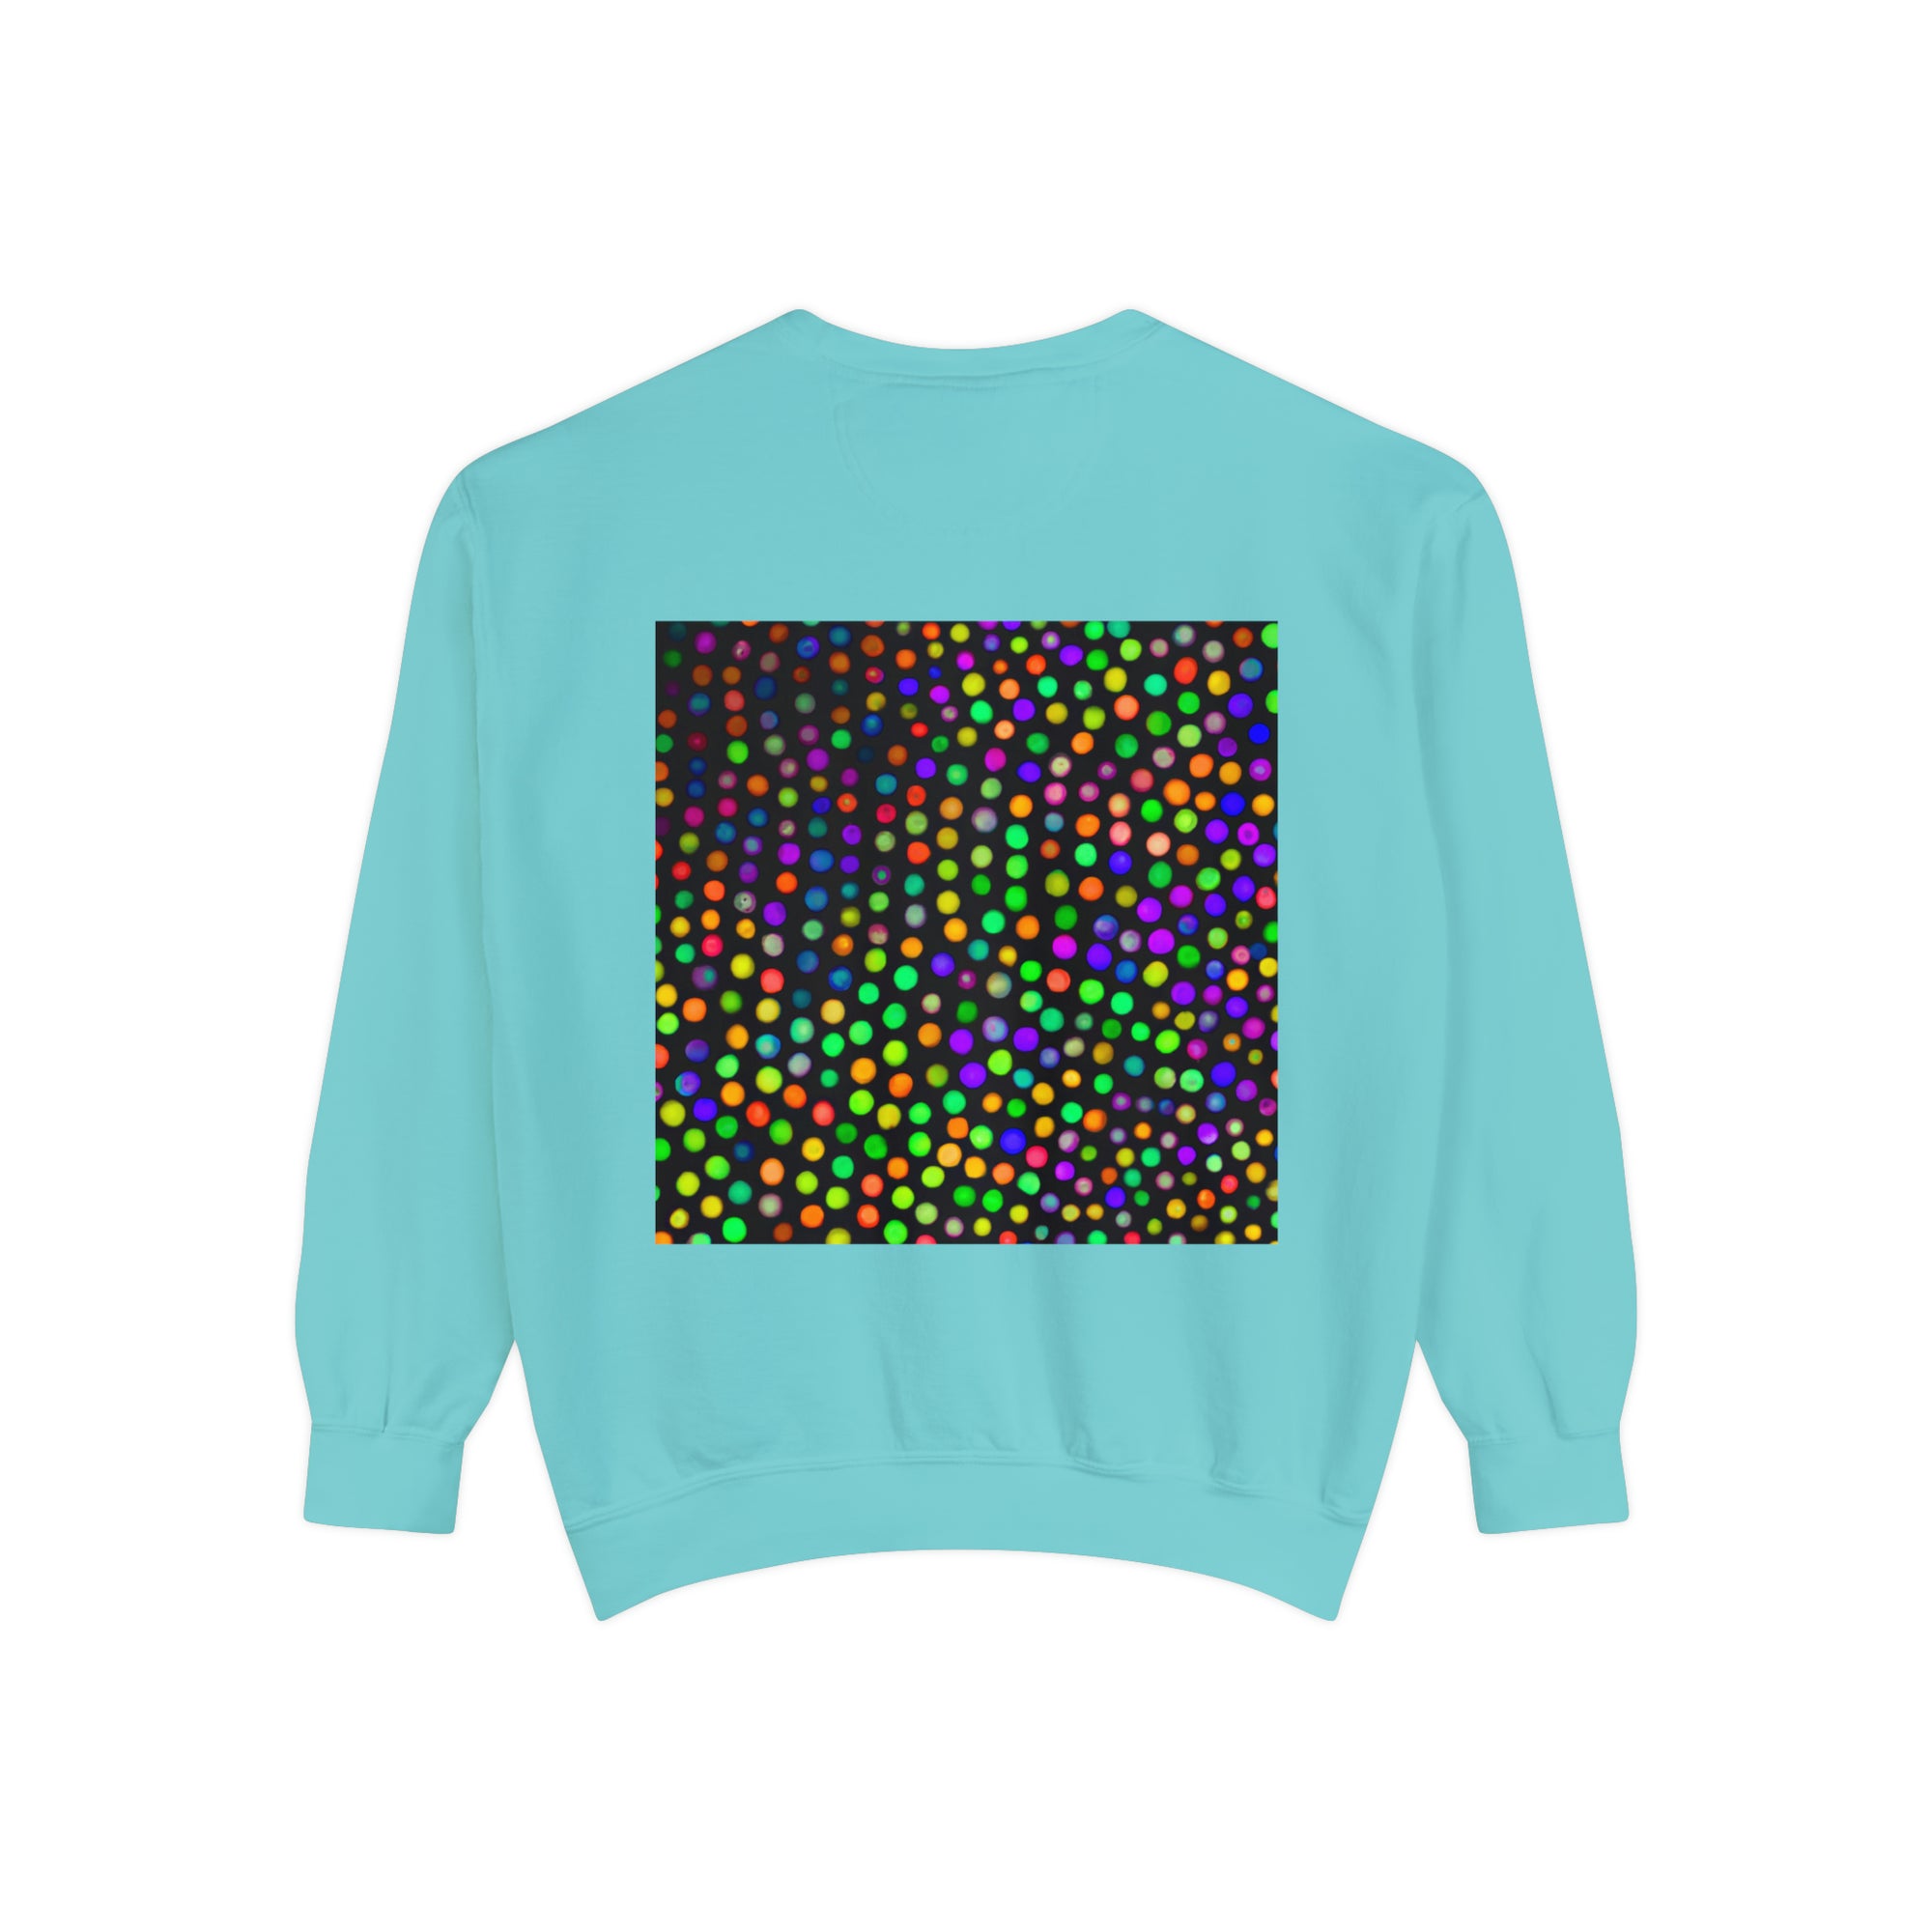 "Be Bold" - Sweatshirt Garment-Dyed